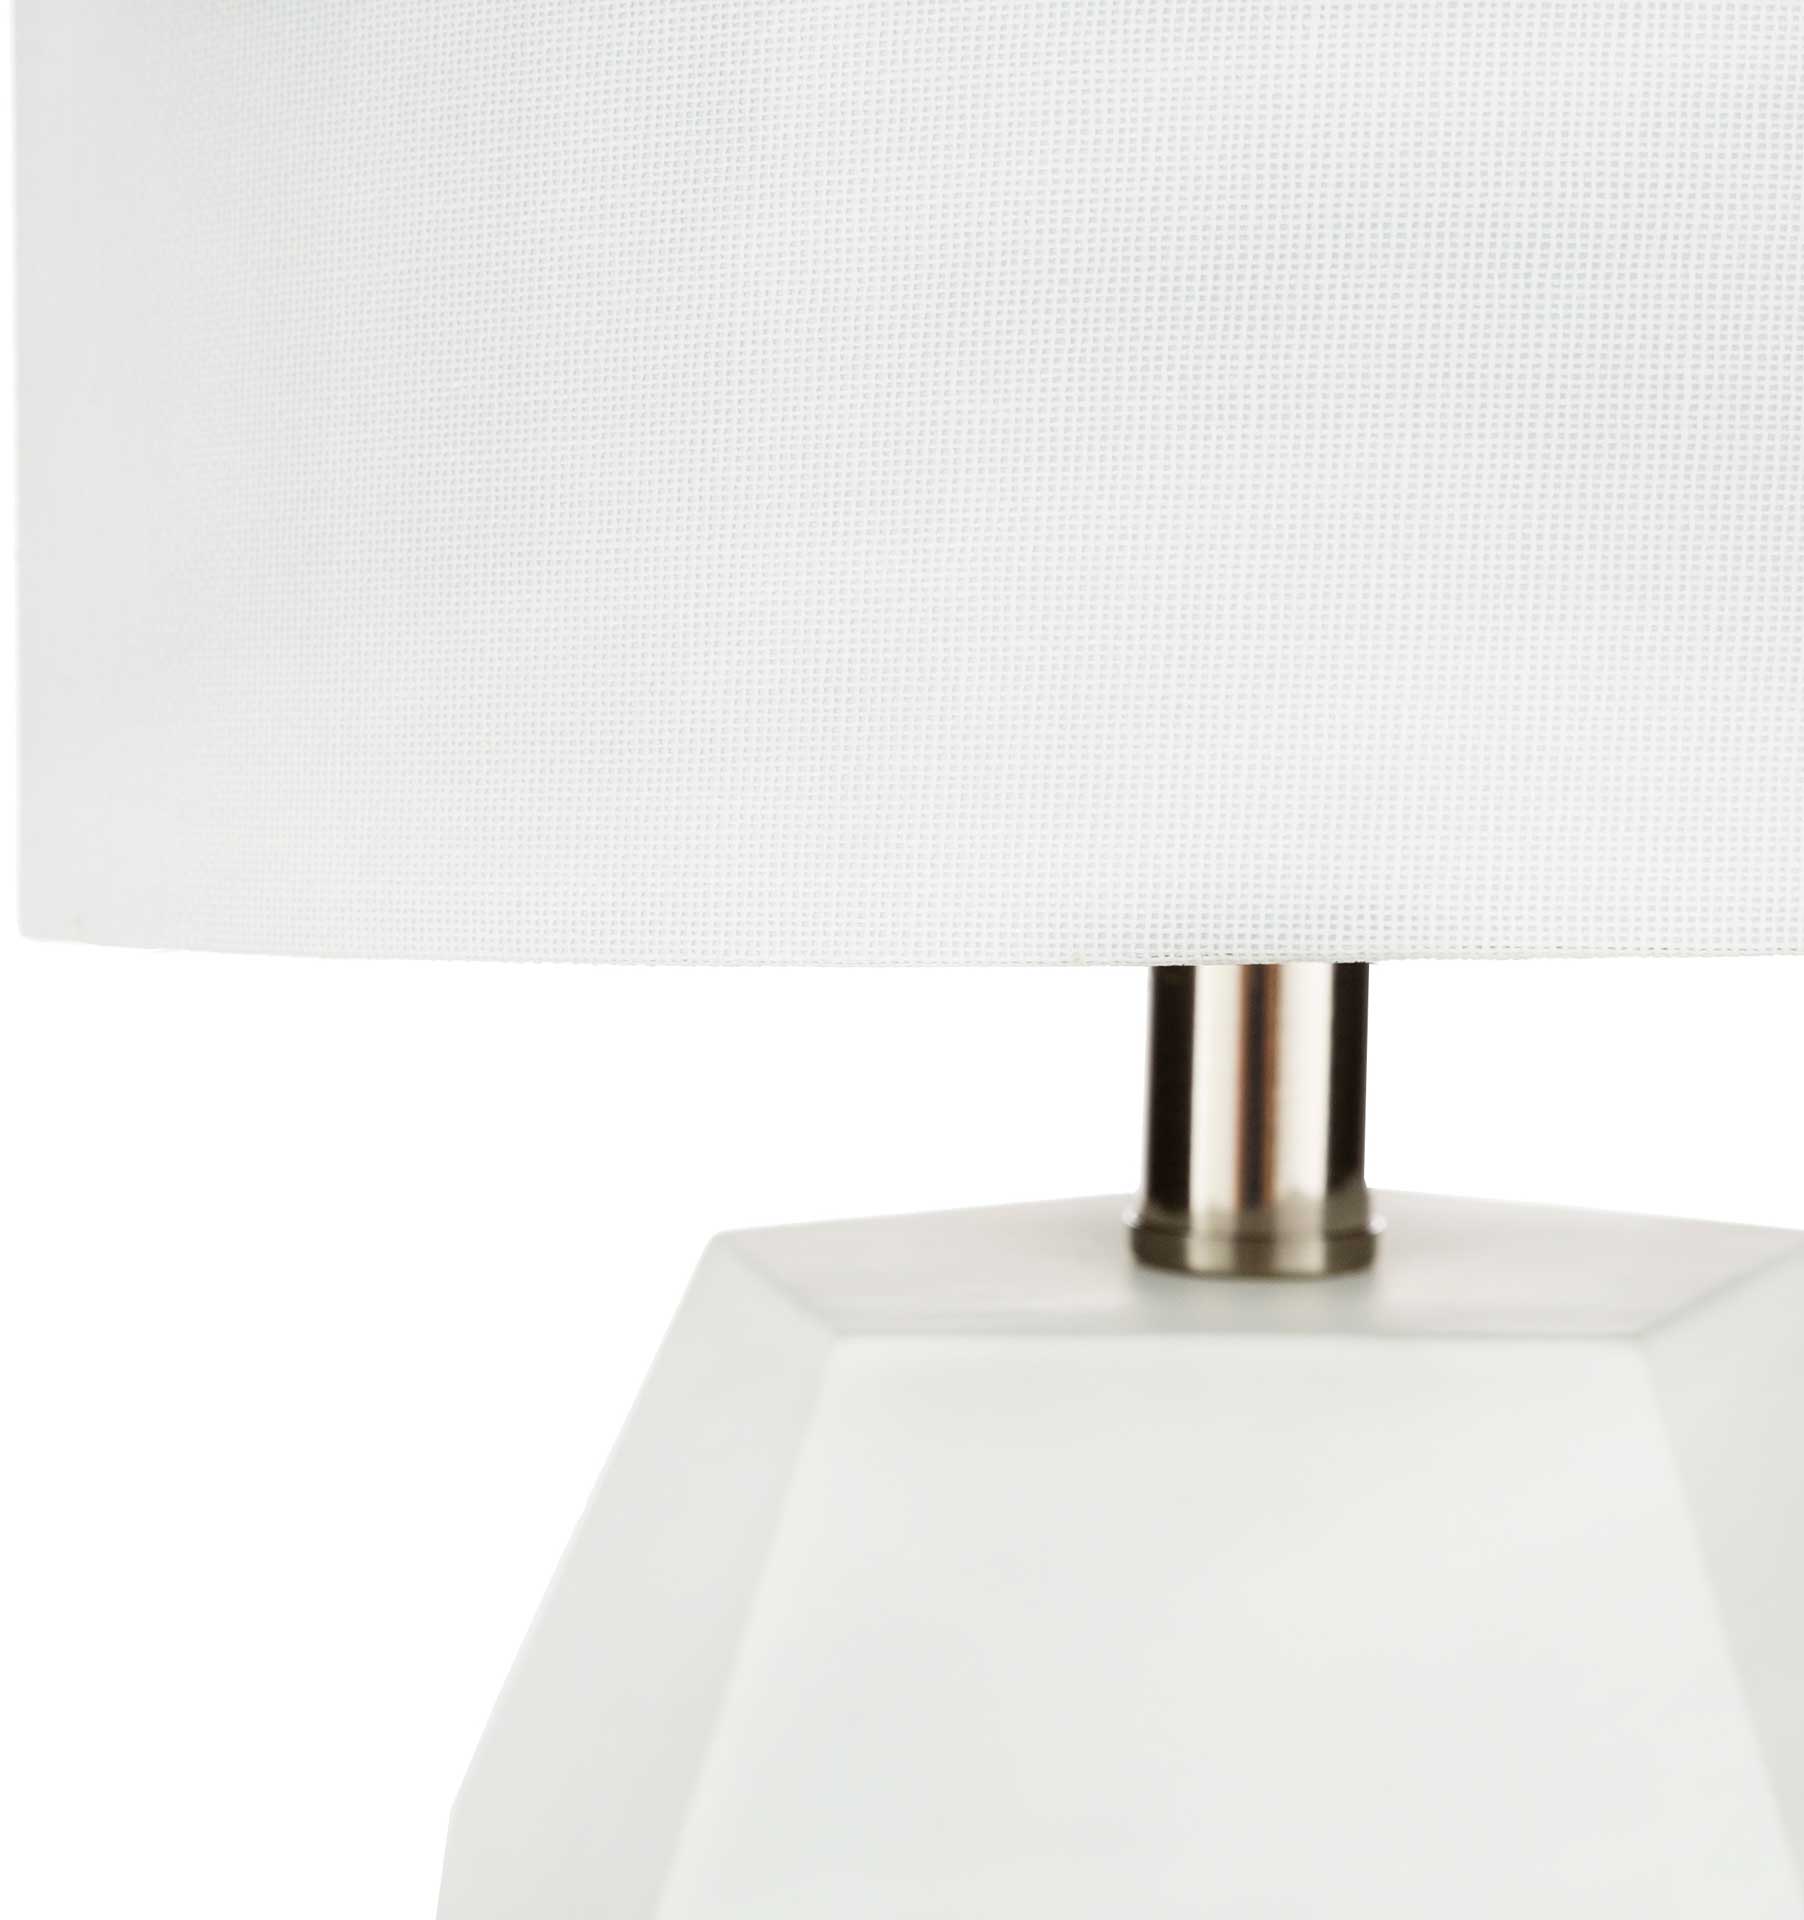 Keanu Table Lamp White